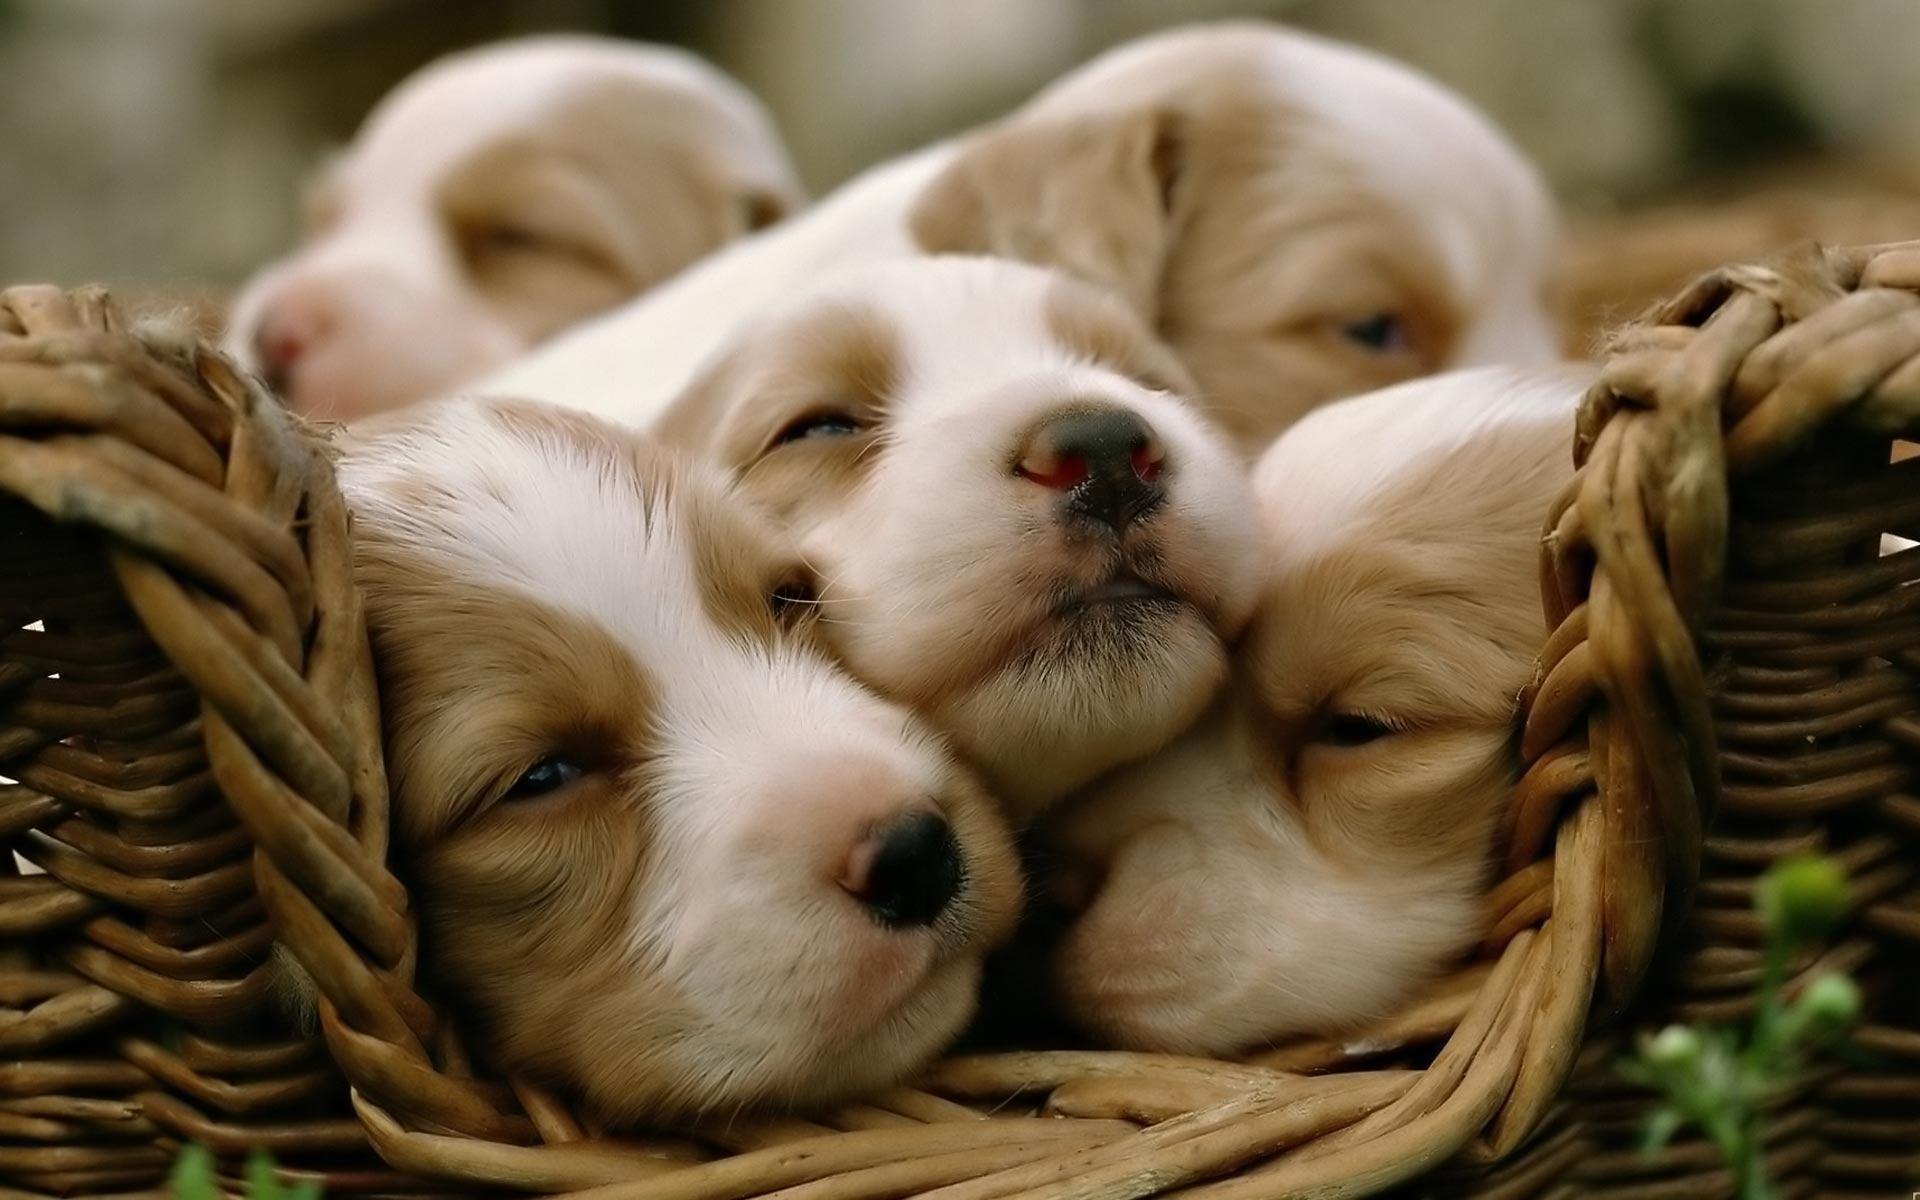 Desktop Wallpaper · Gallery · Animals · Cute puppies | Free ...